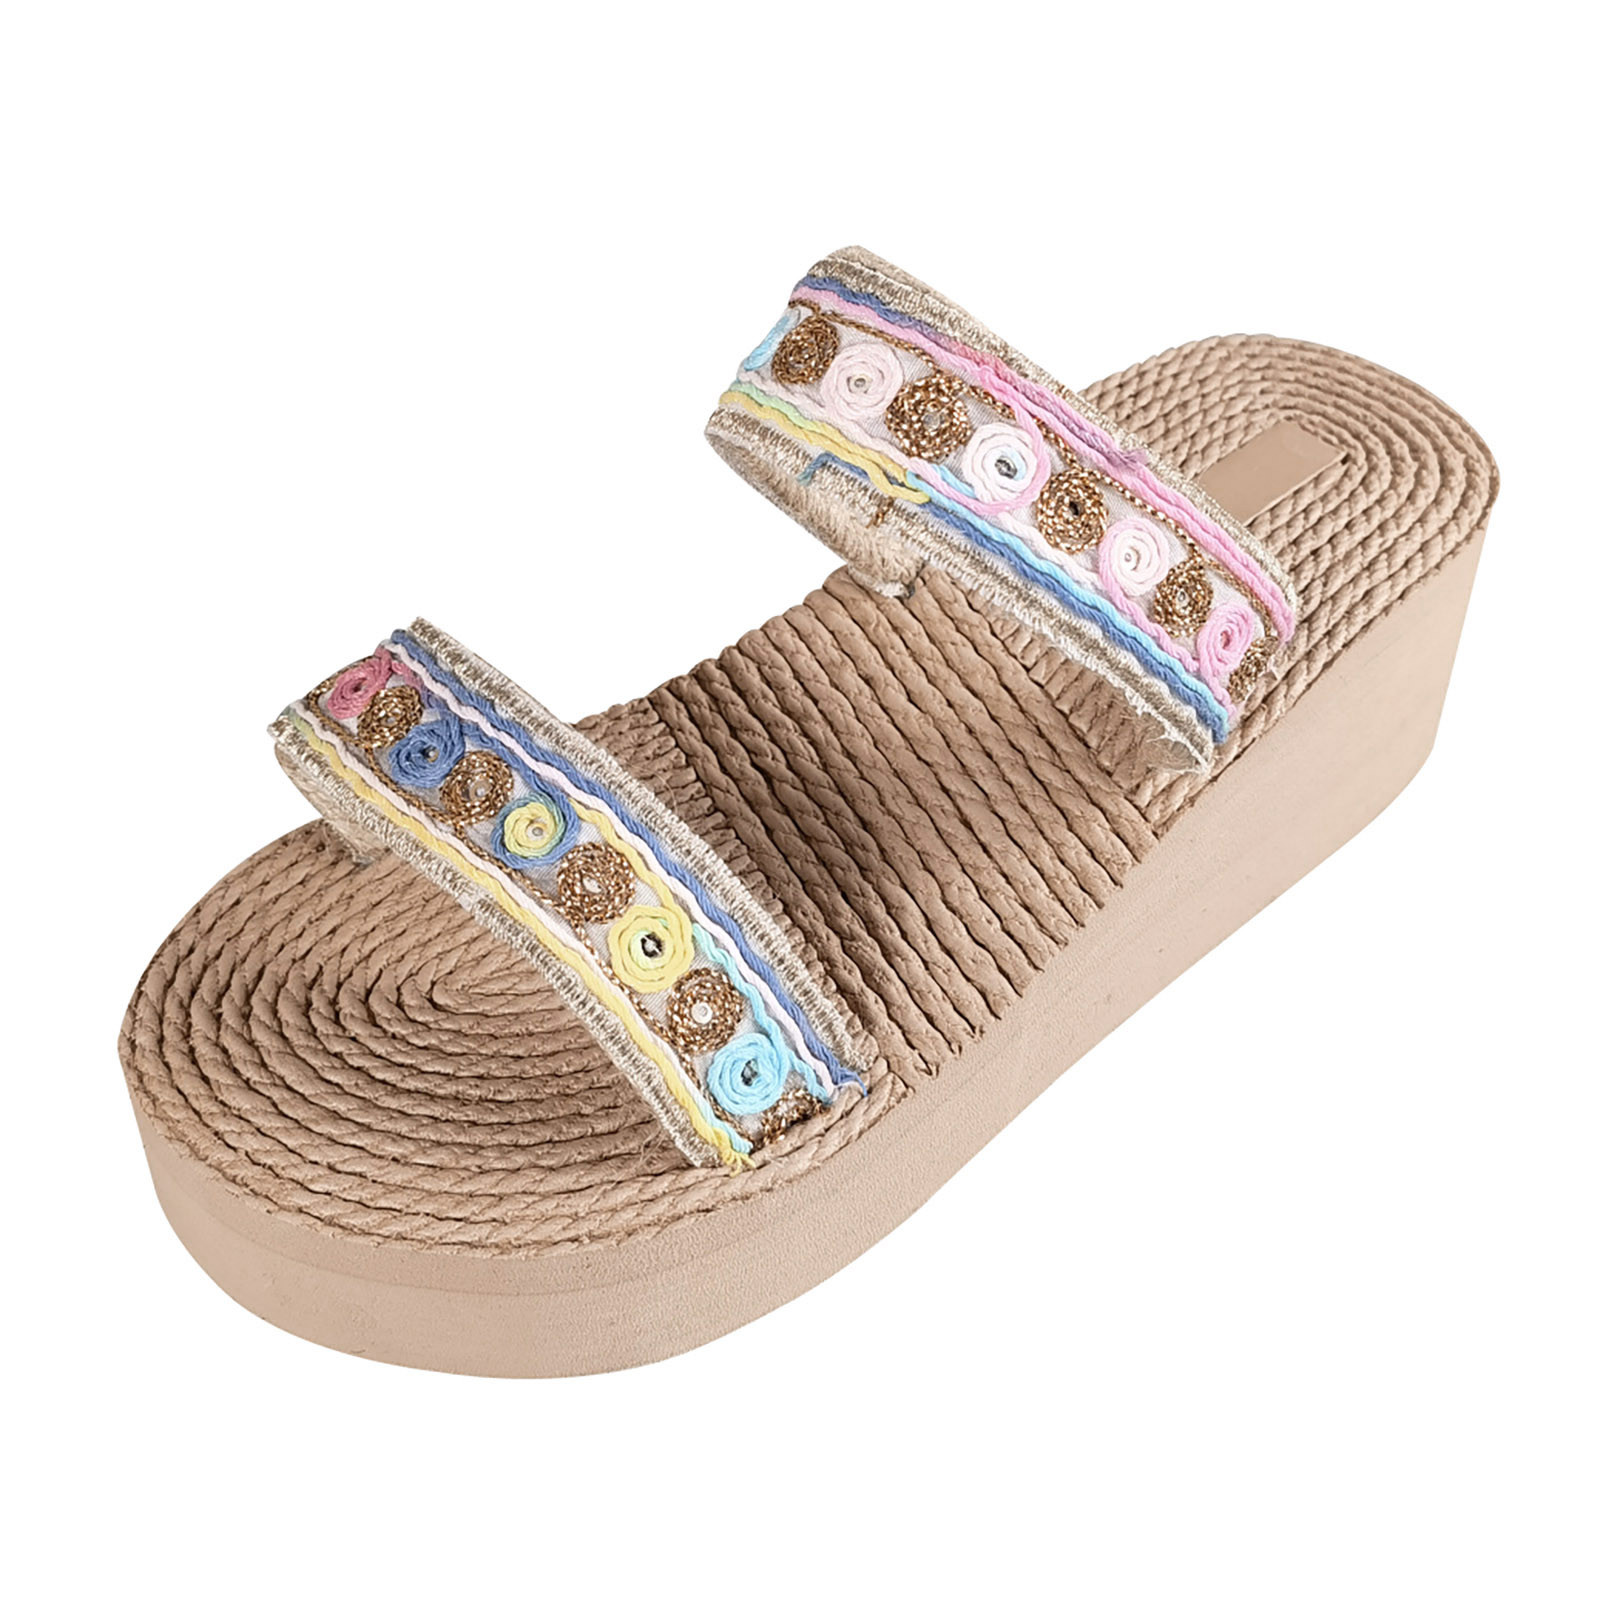 Platform Sandals for Women Platform Wedges Ladies Summer Bohemian Style ...